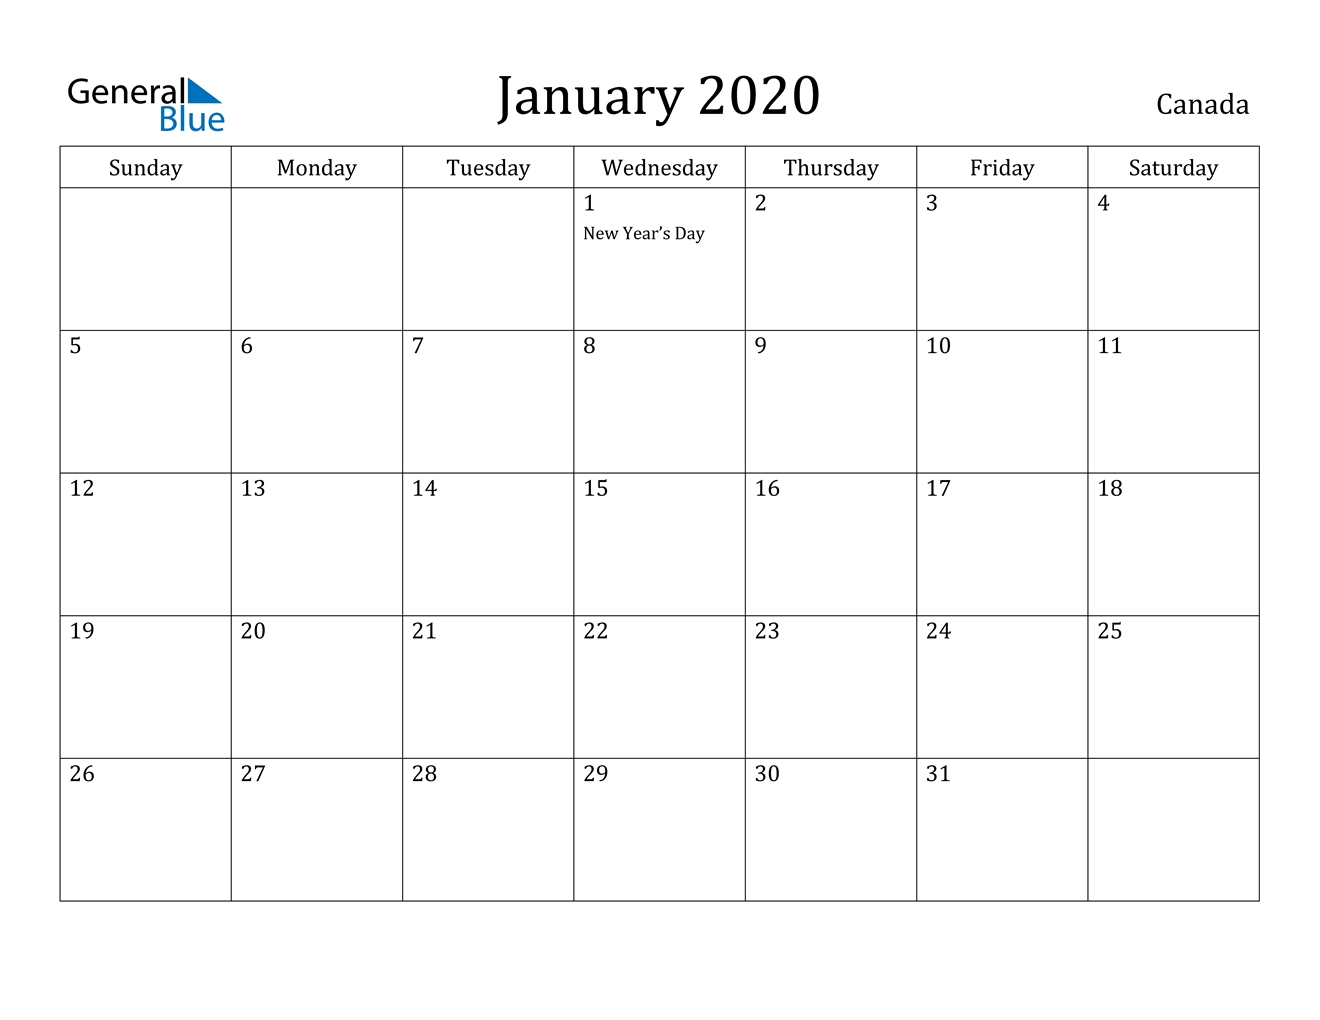 January 2020 Calendar - Canada Incredible September 2020 Calendar Canada